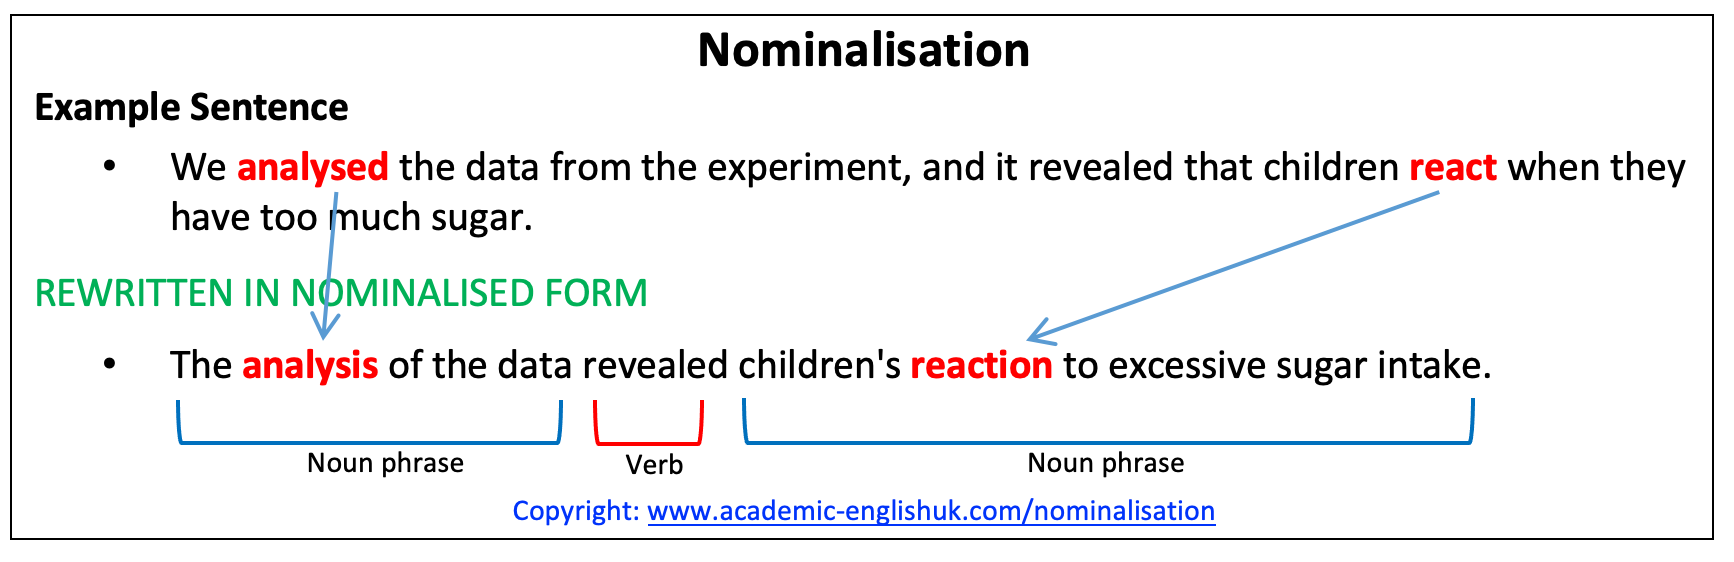 Nominalisation Example